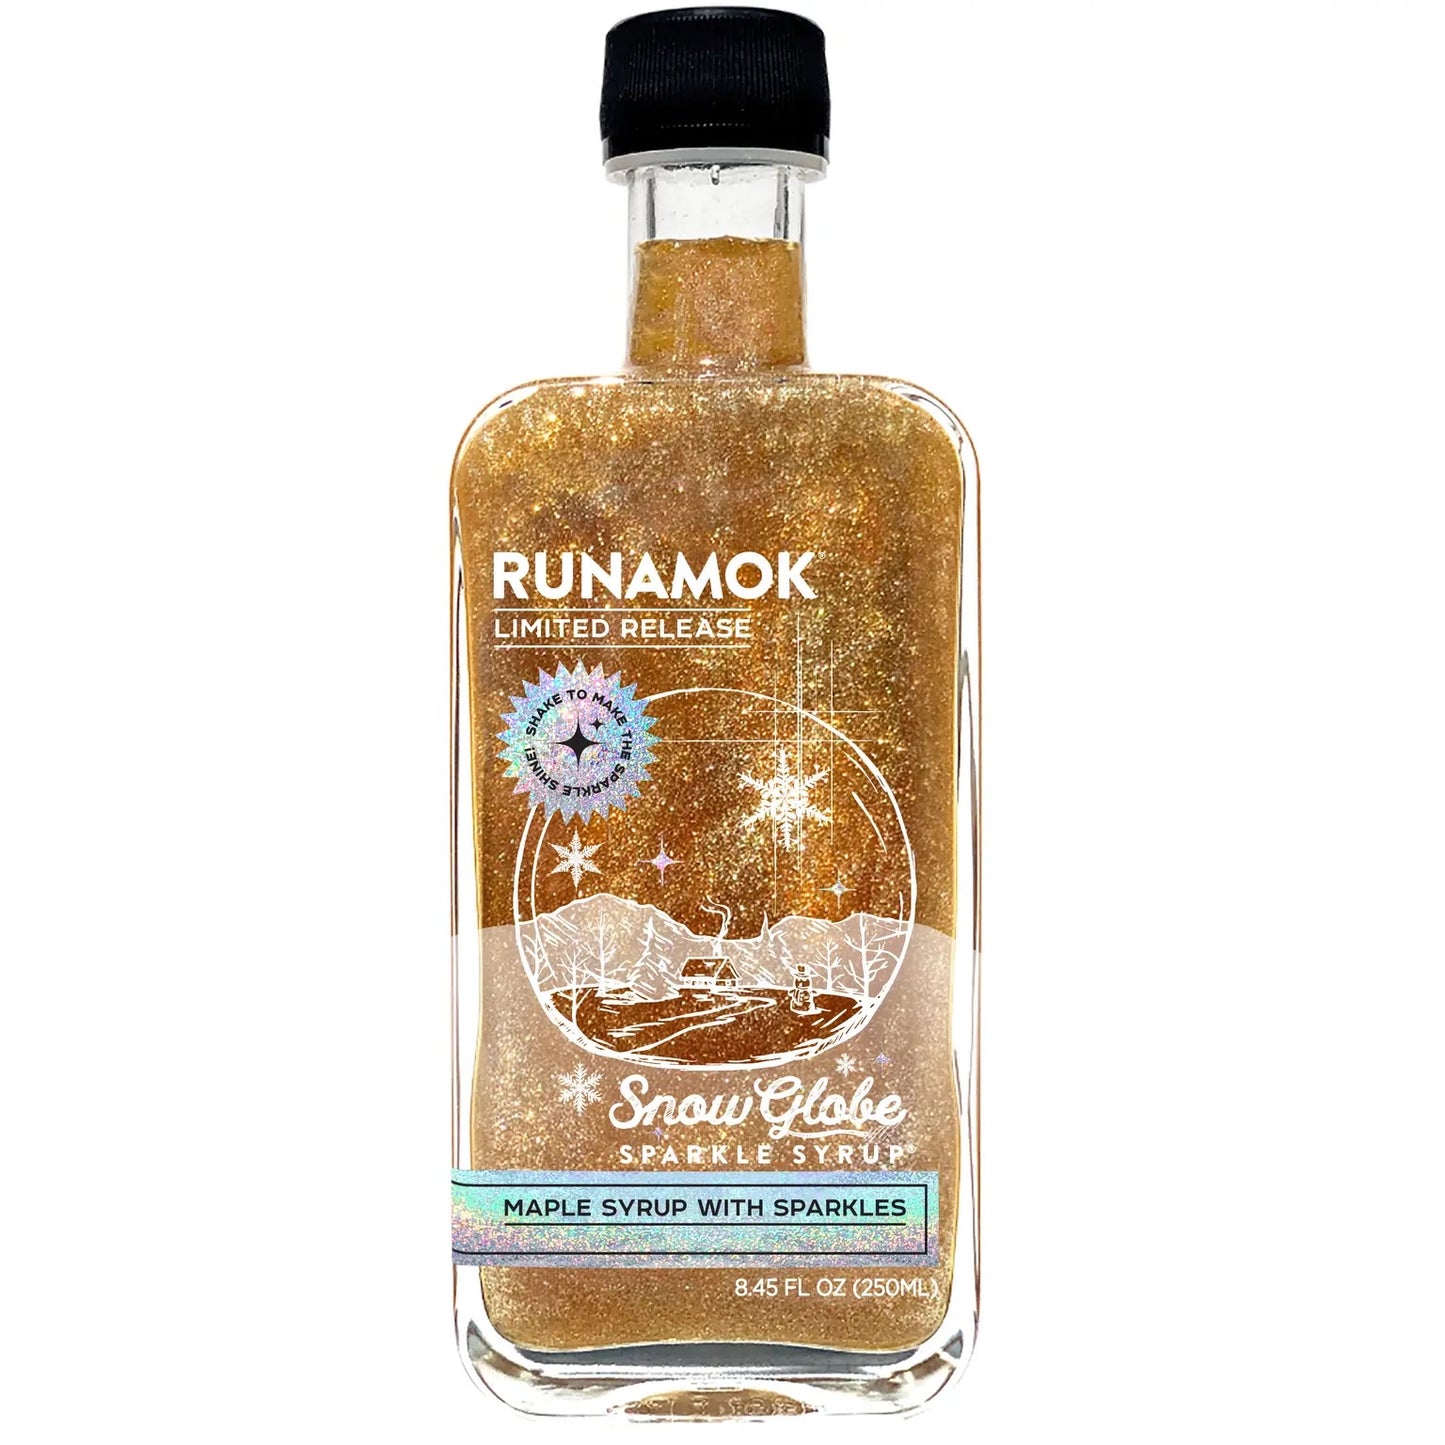 Runamok Snowglobe Sparkle Syrup